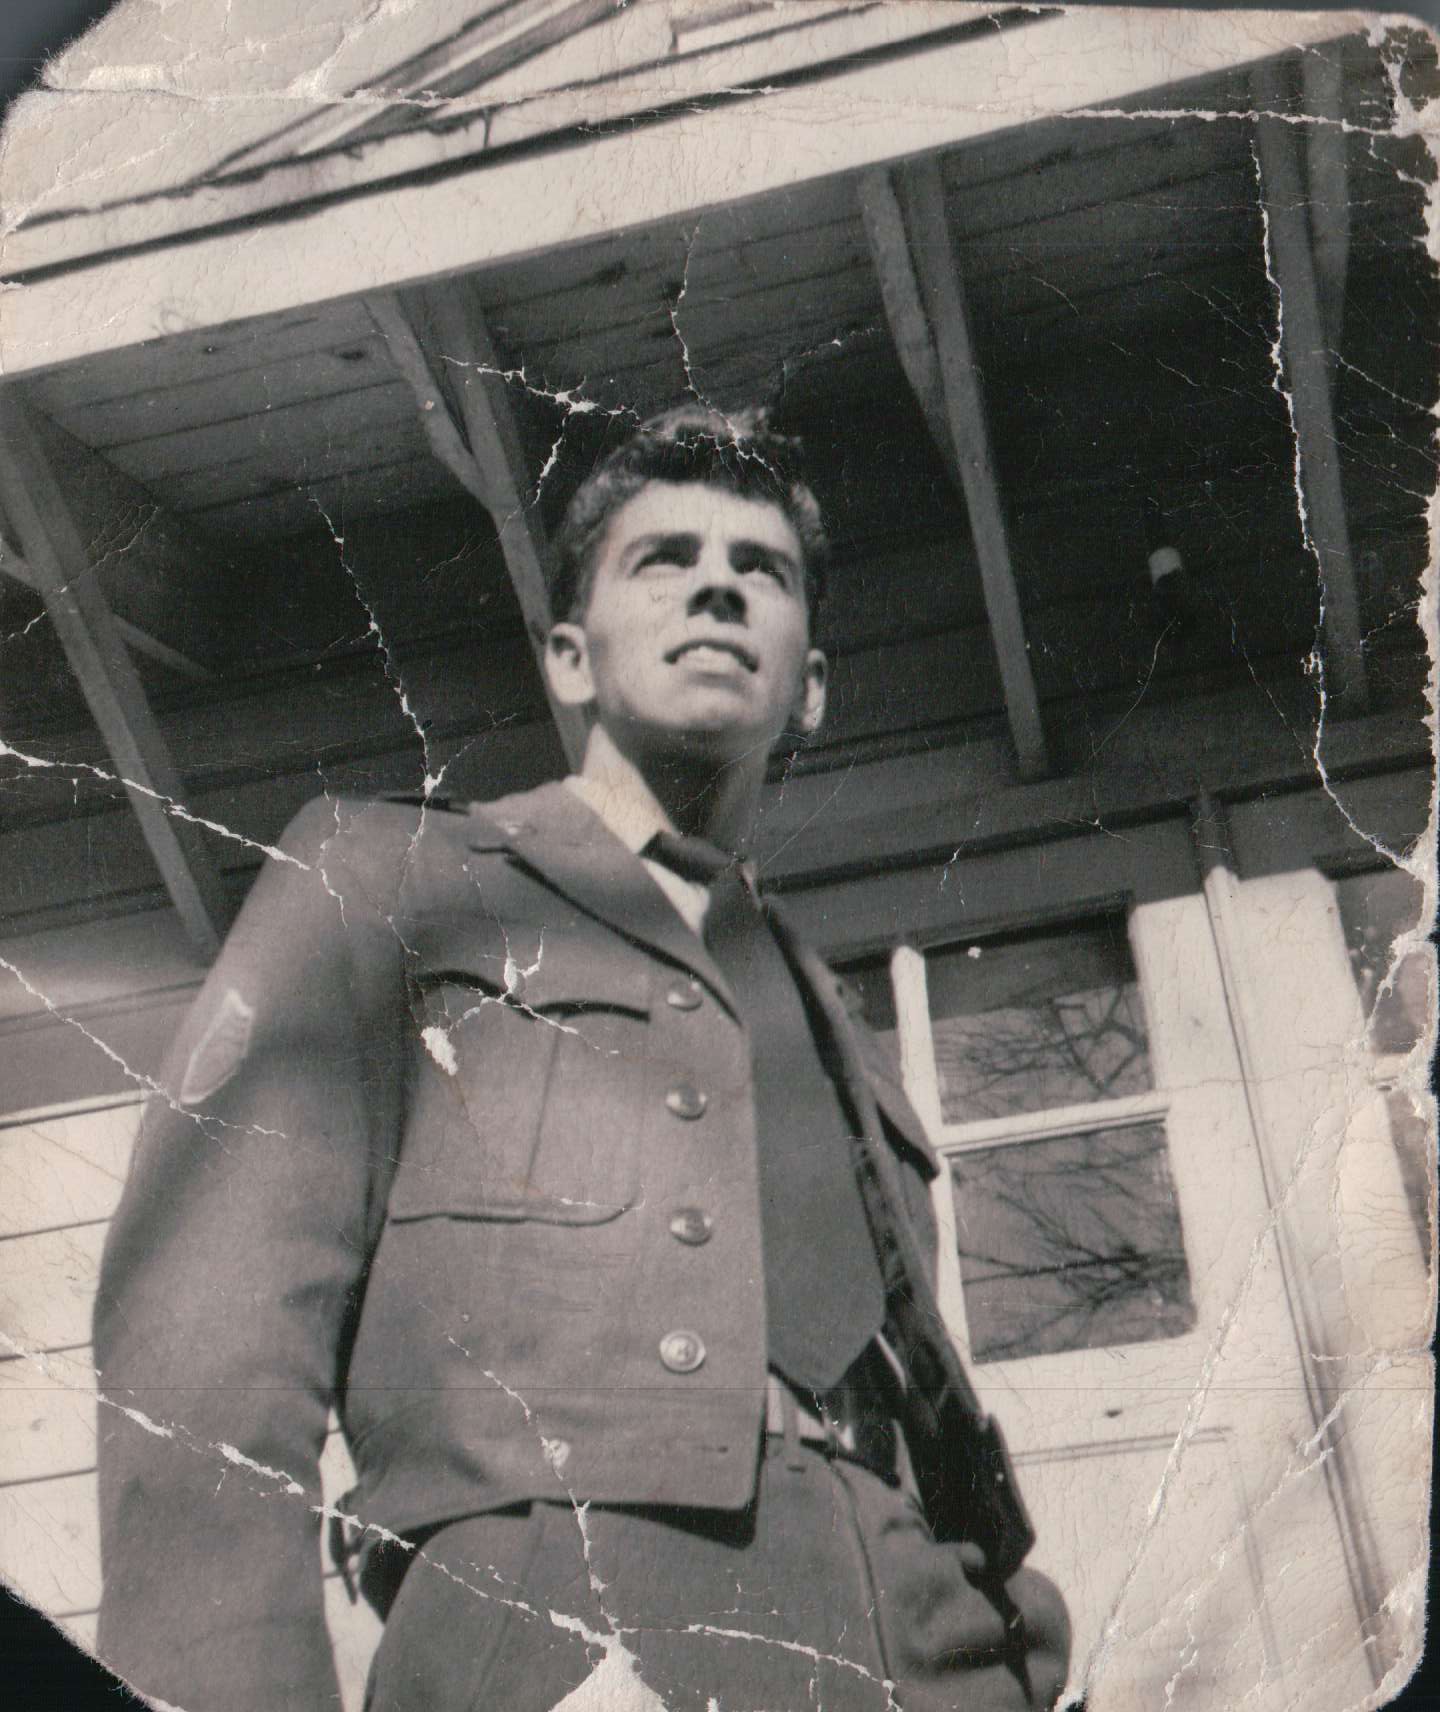 Auletti at Fort Leonard, Missouri while training for war